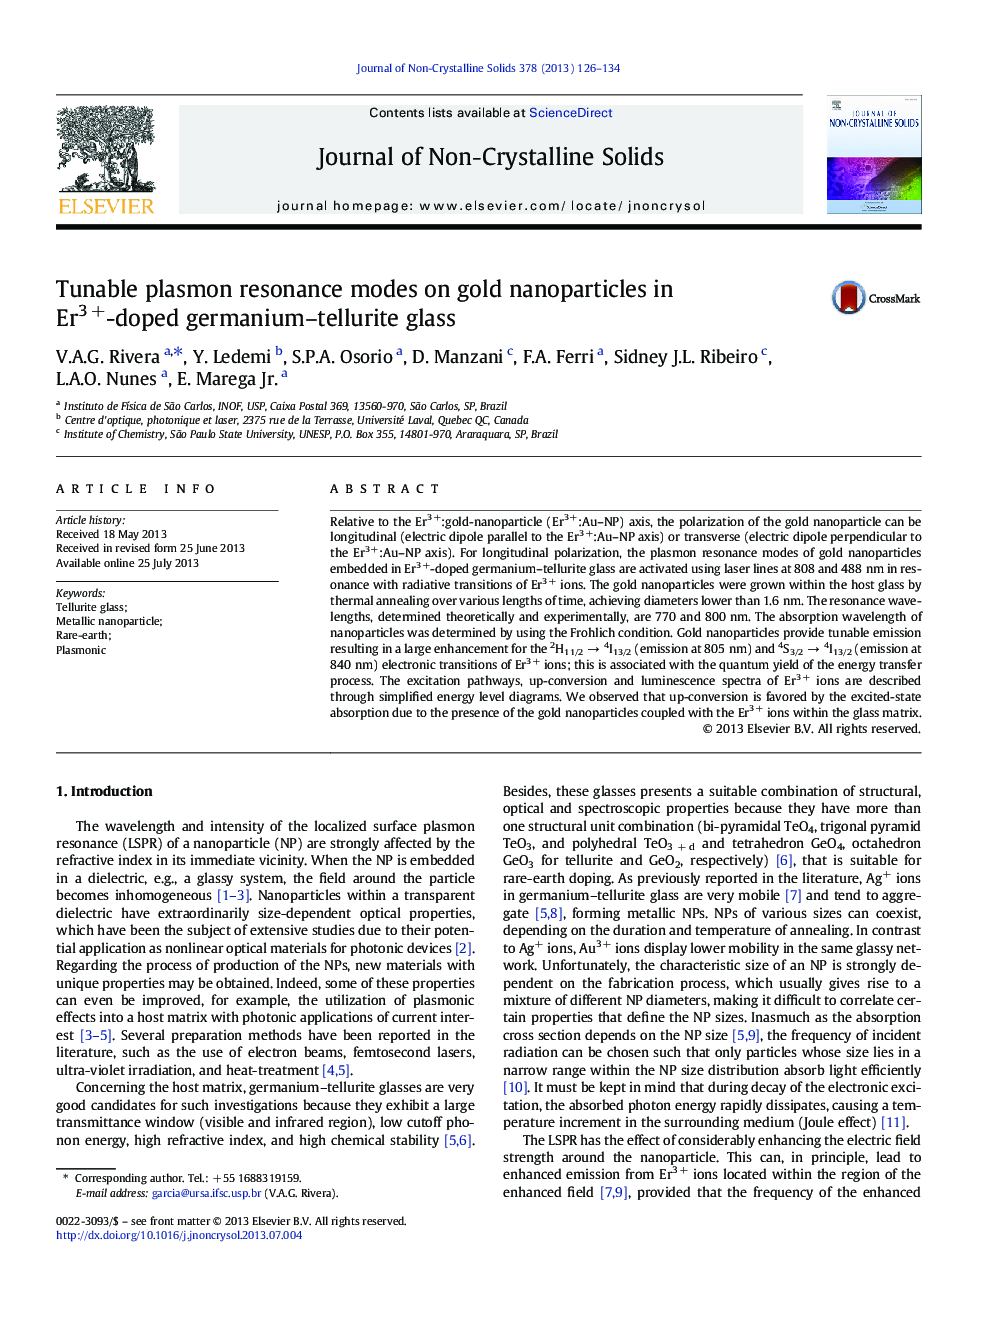 Tunable plasmon resonance modes on gold nanoparticles in Er3Â +-doped germanium-tellurite glass